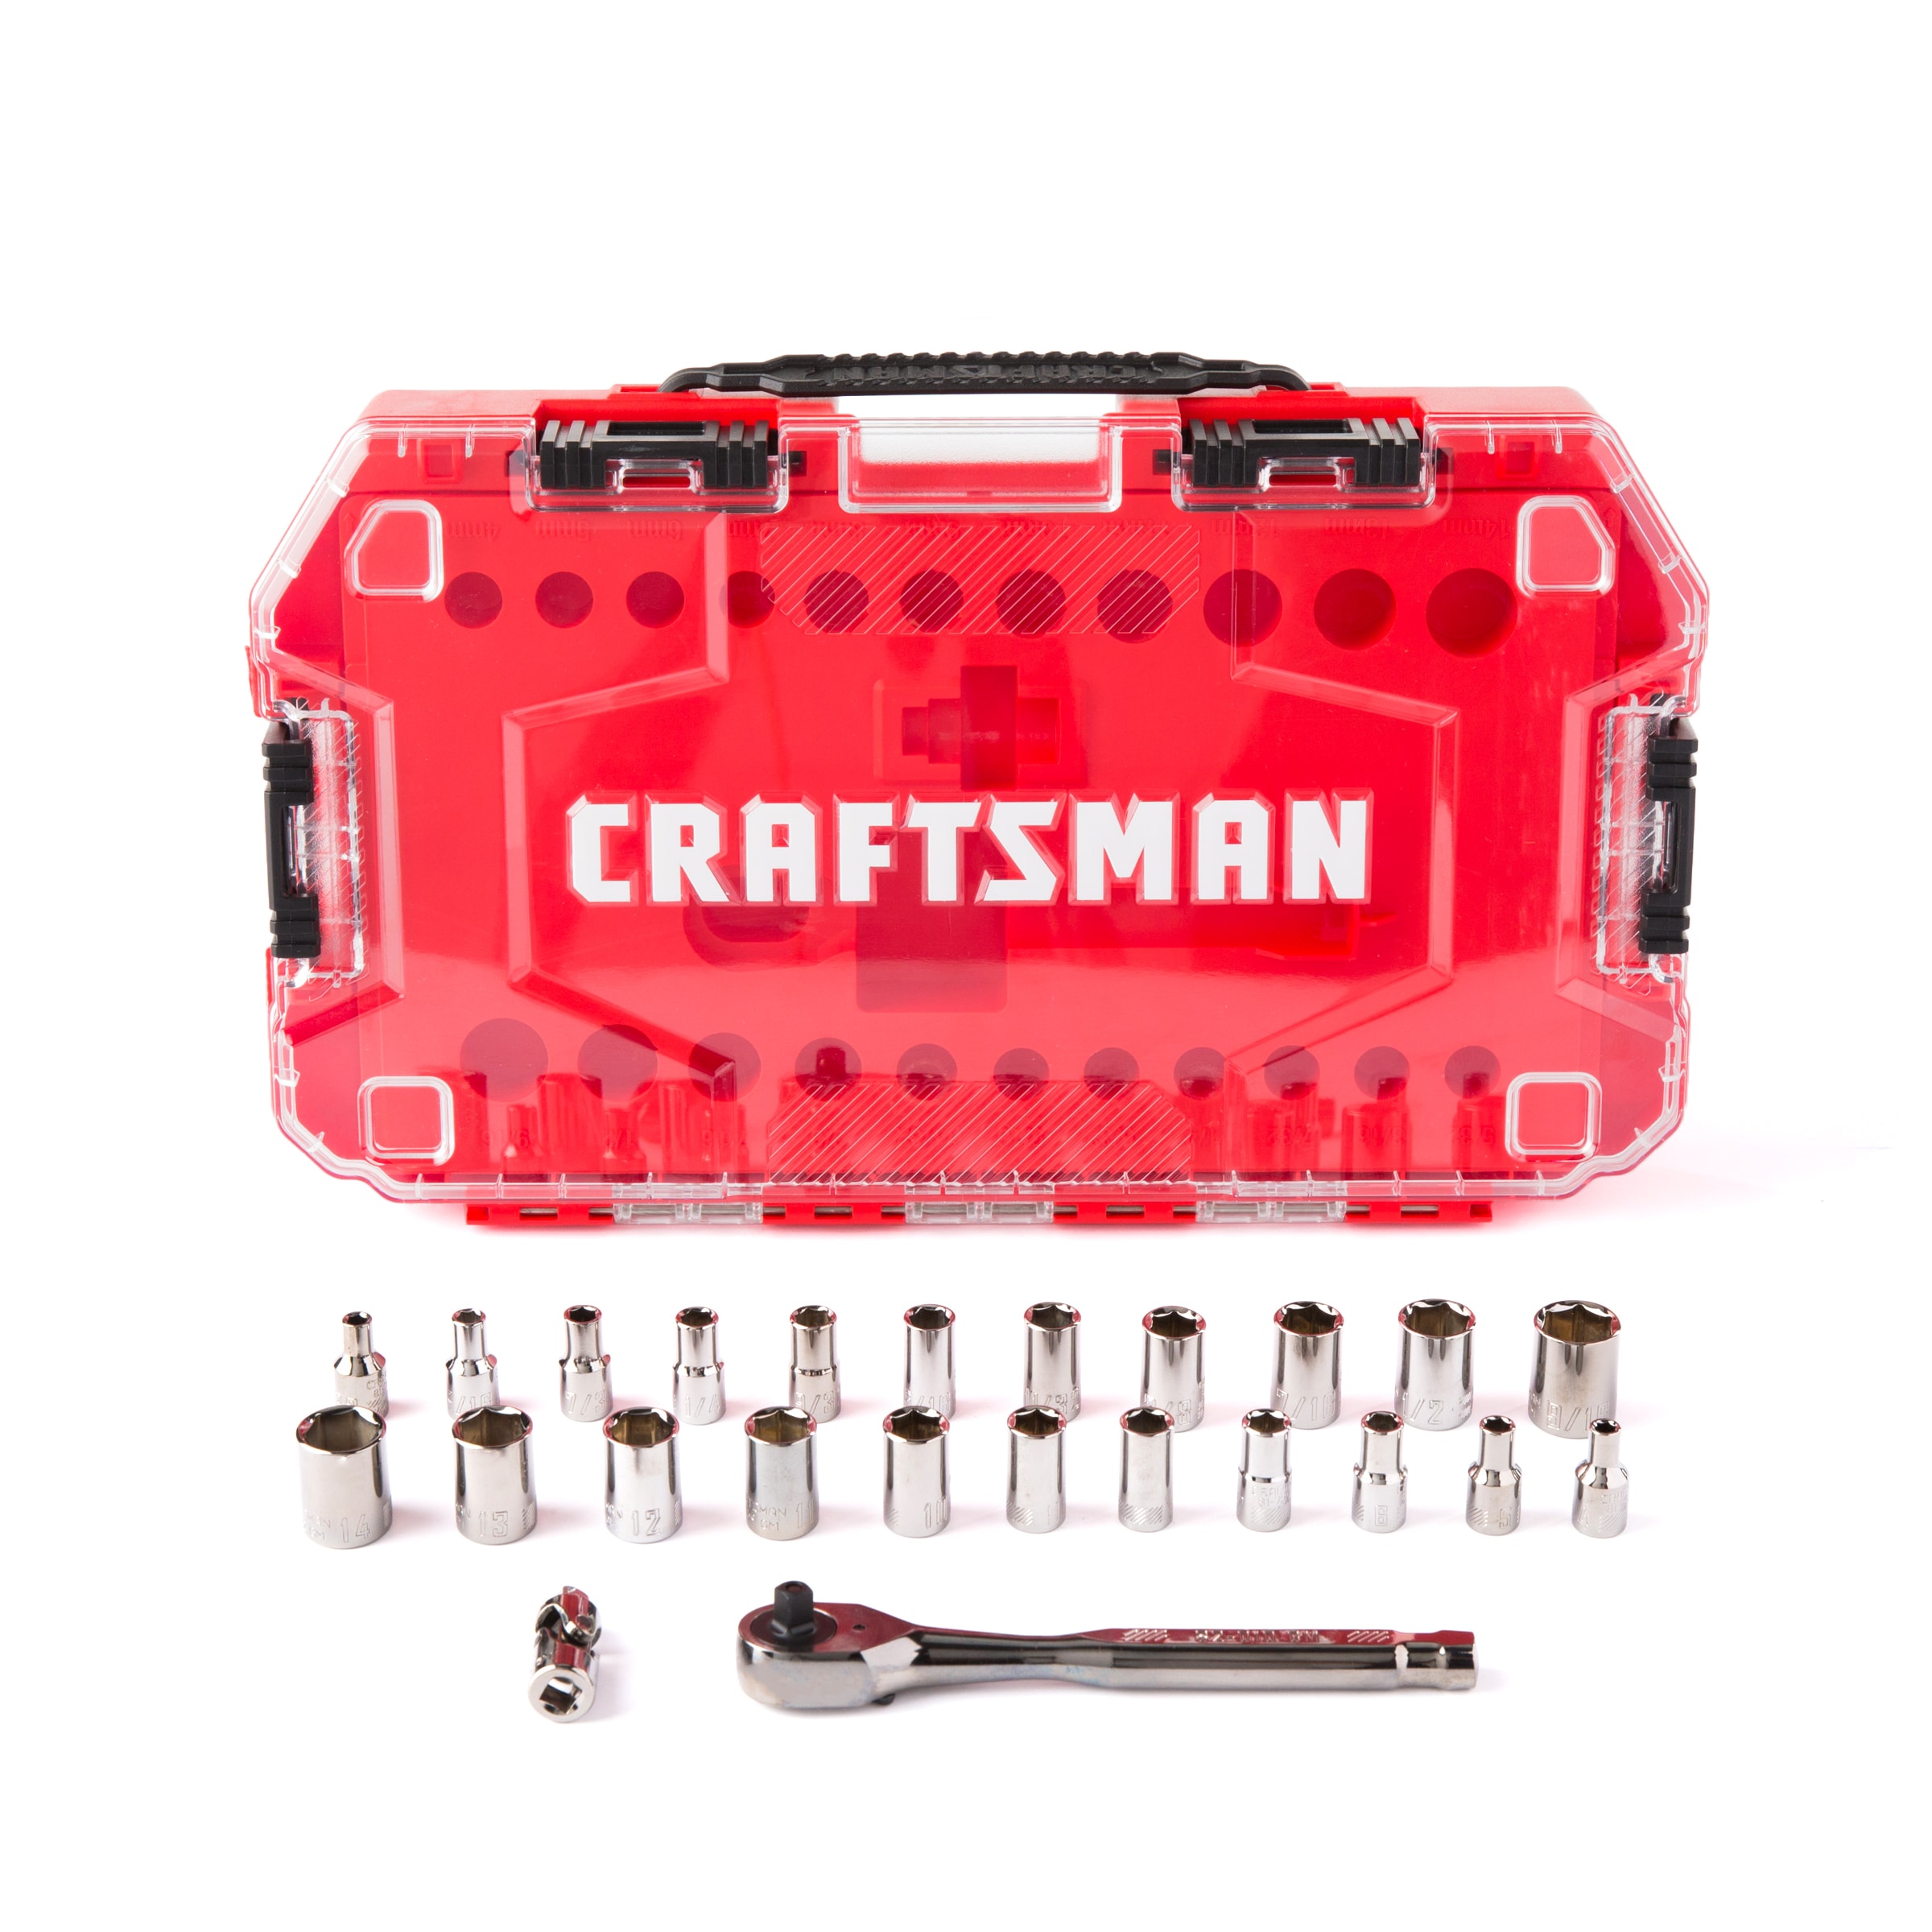 KS Tools 1/4+1/2 Socket Wrench-Set 94 Pieces, Grey